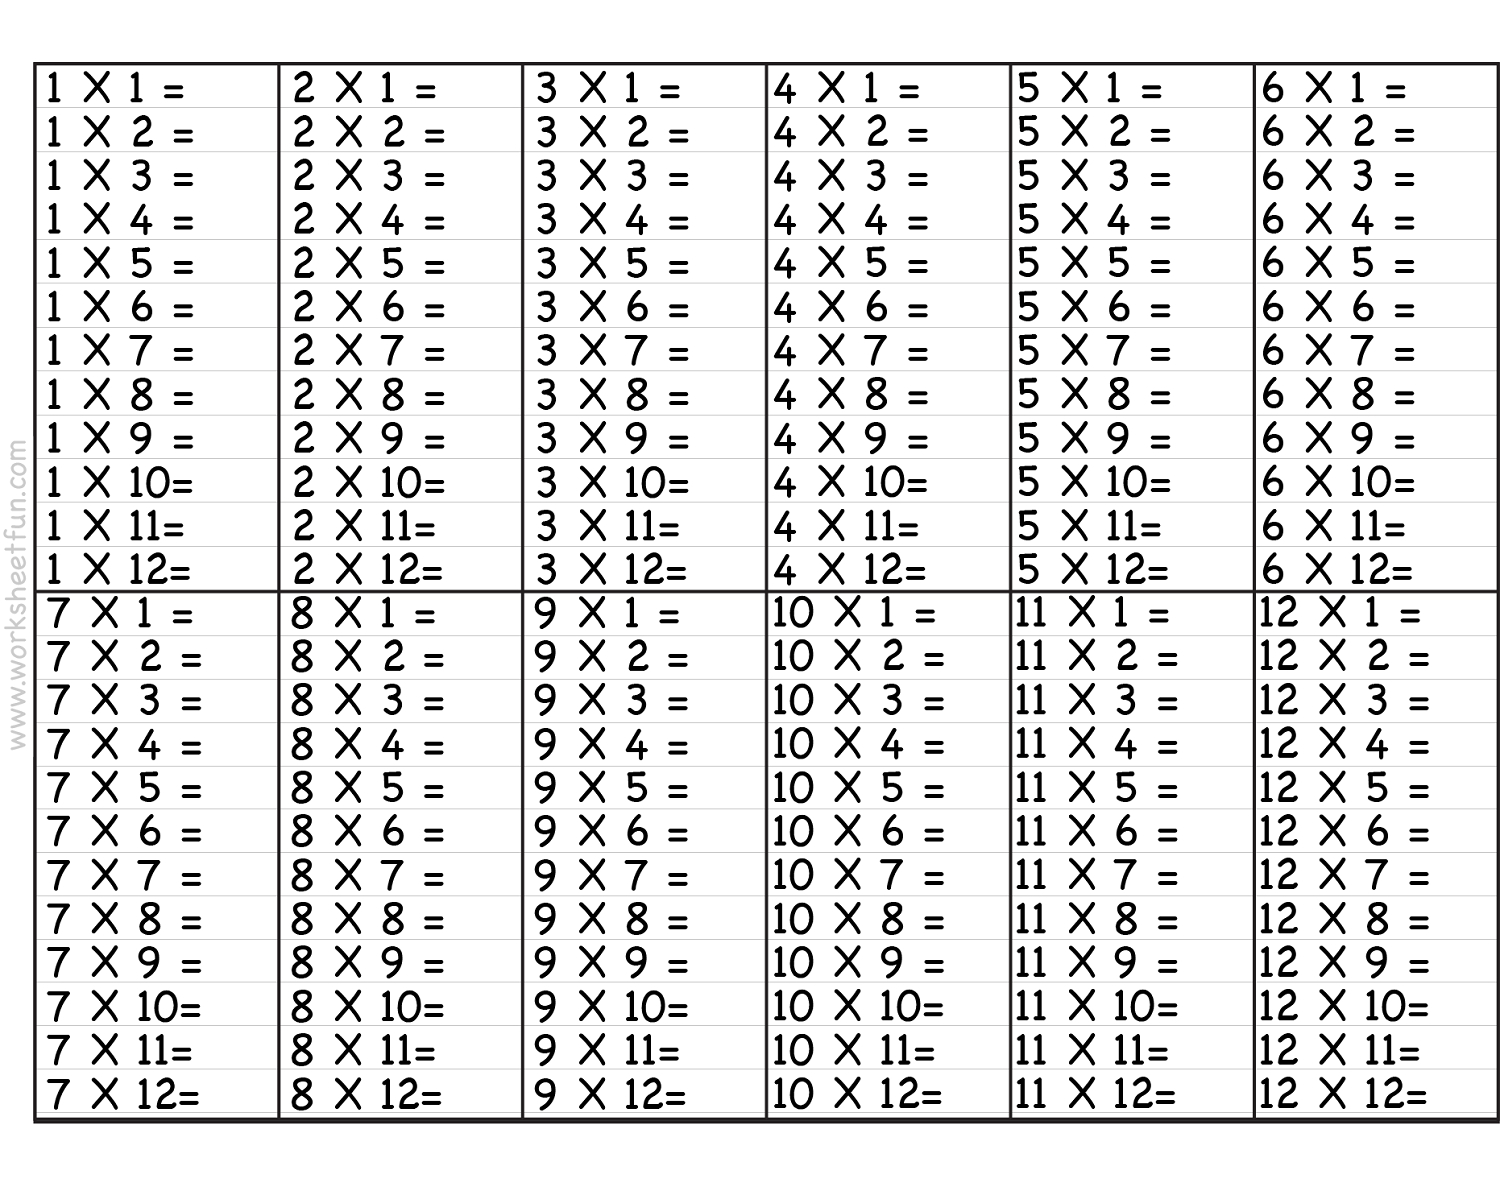 Large Multiplication Table For Children Mathematics Lesson regarding Free Printable Large Multiplication Chart